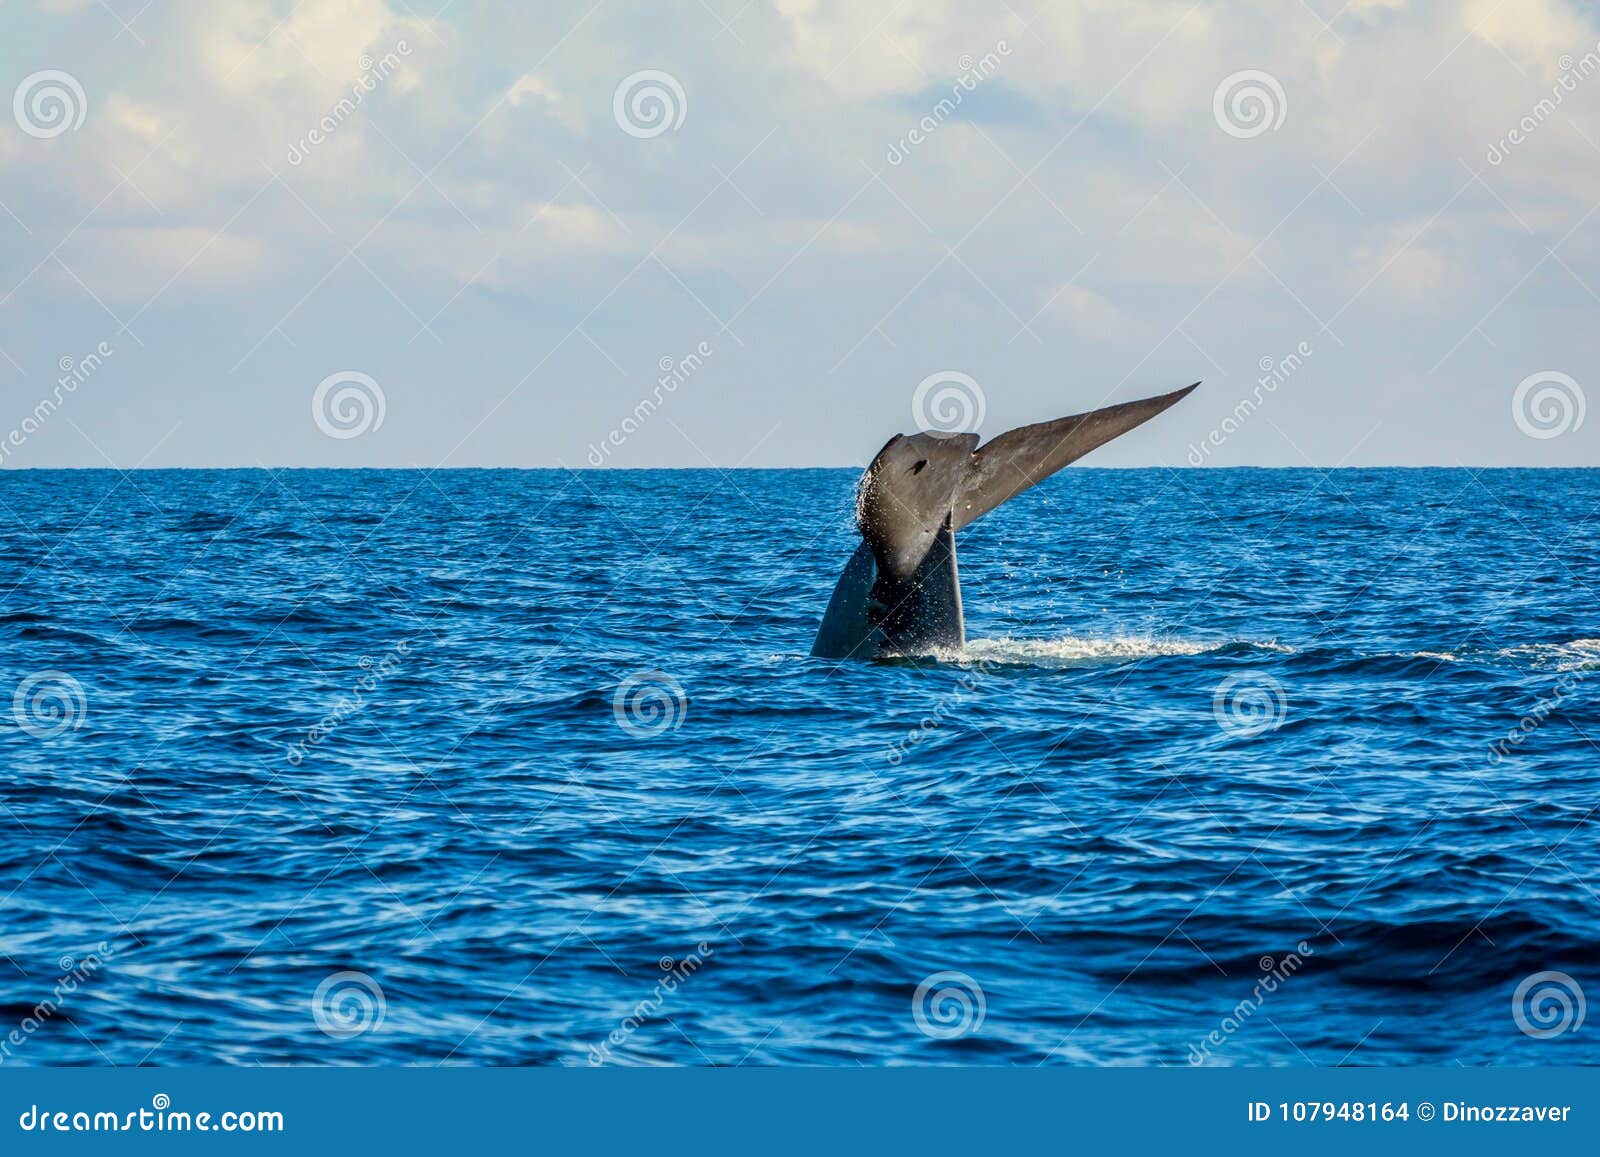 https://thumbs.dreamstime.com/z/blue-whale-tail-ocean-sri-lanka-107948164.jpg